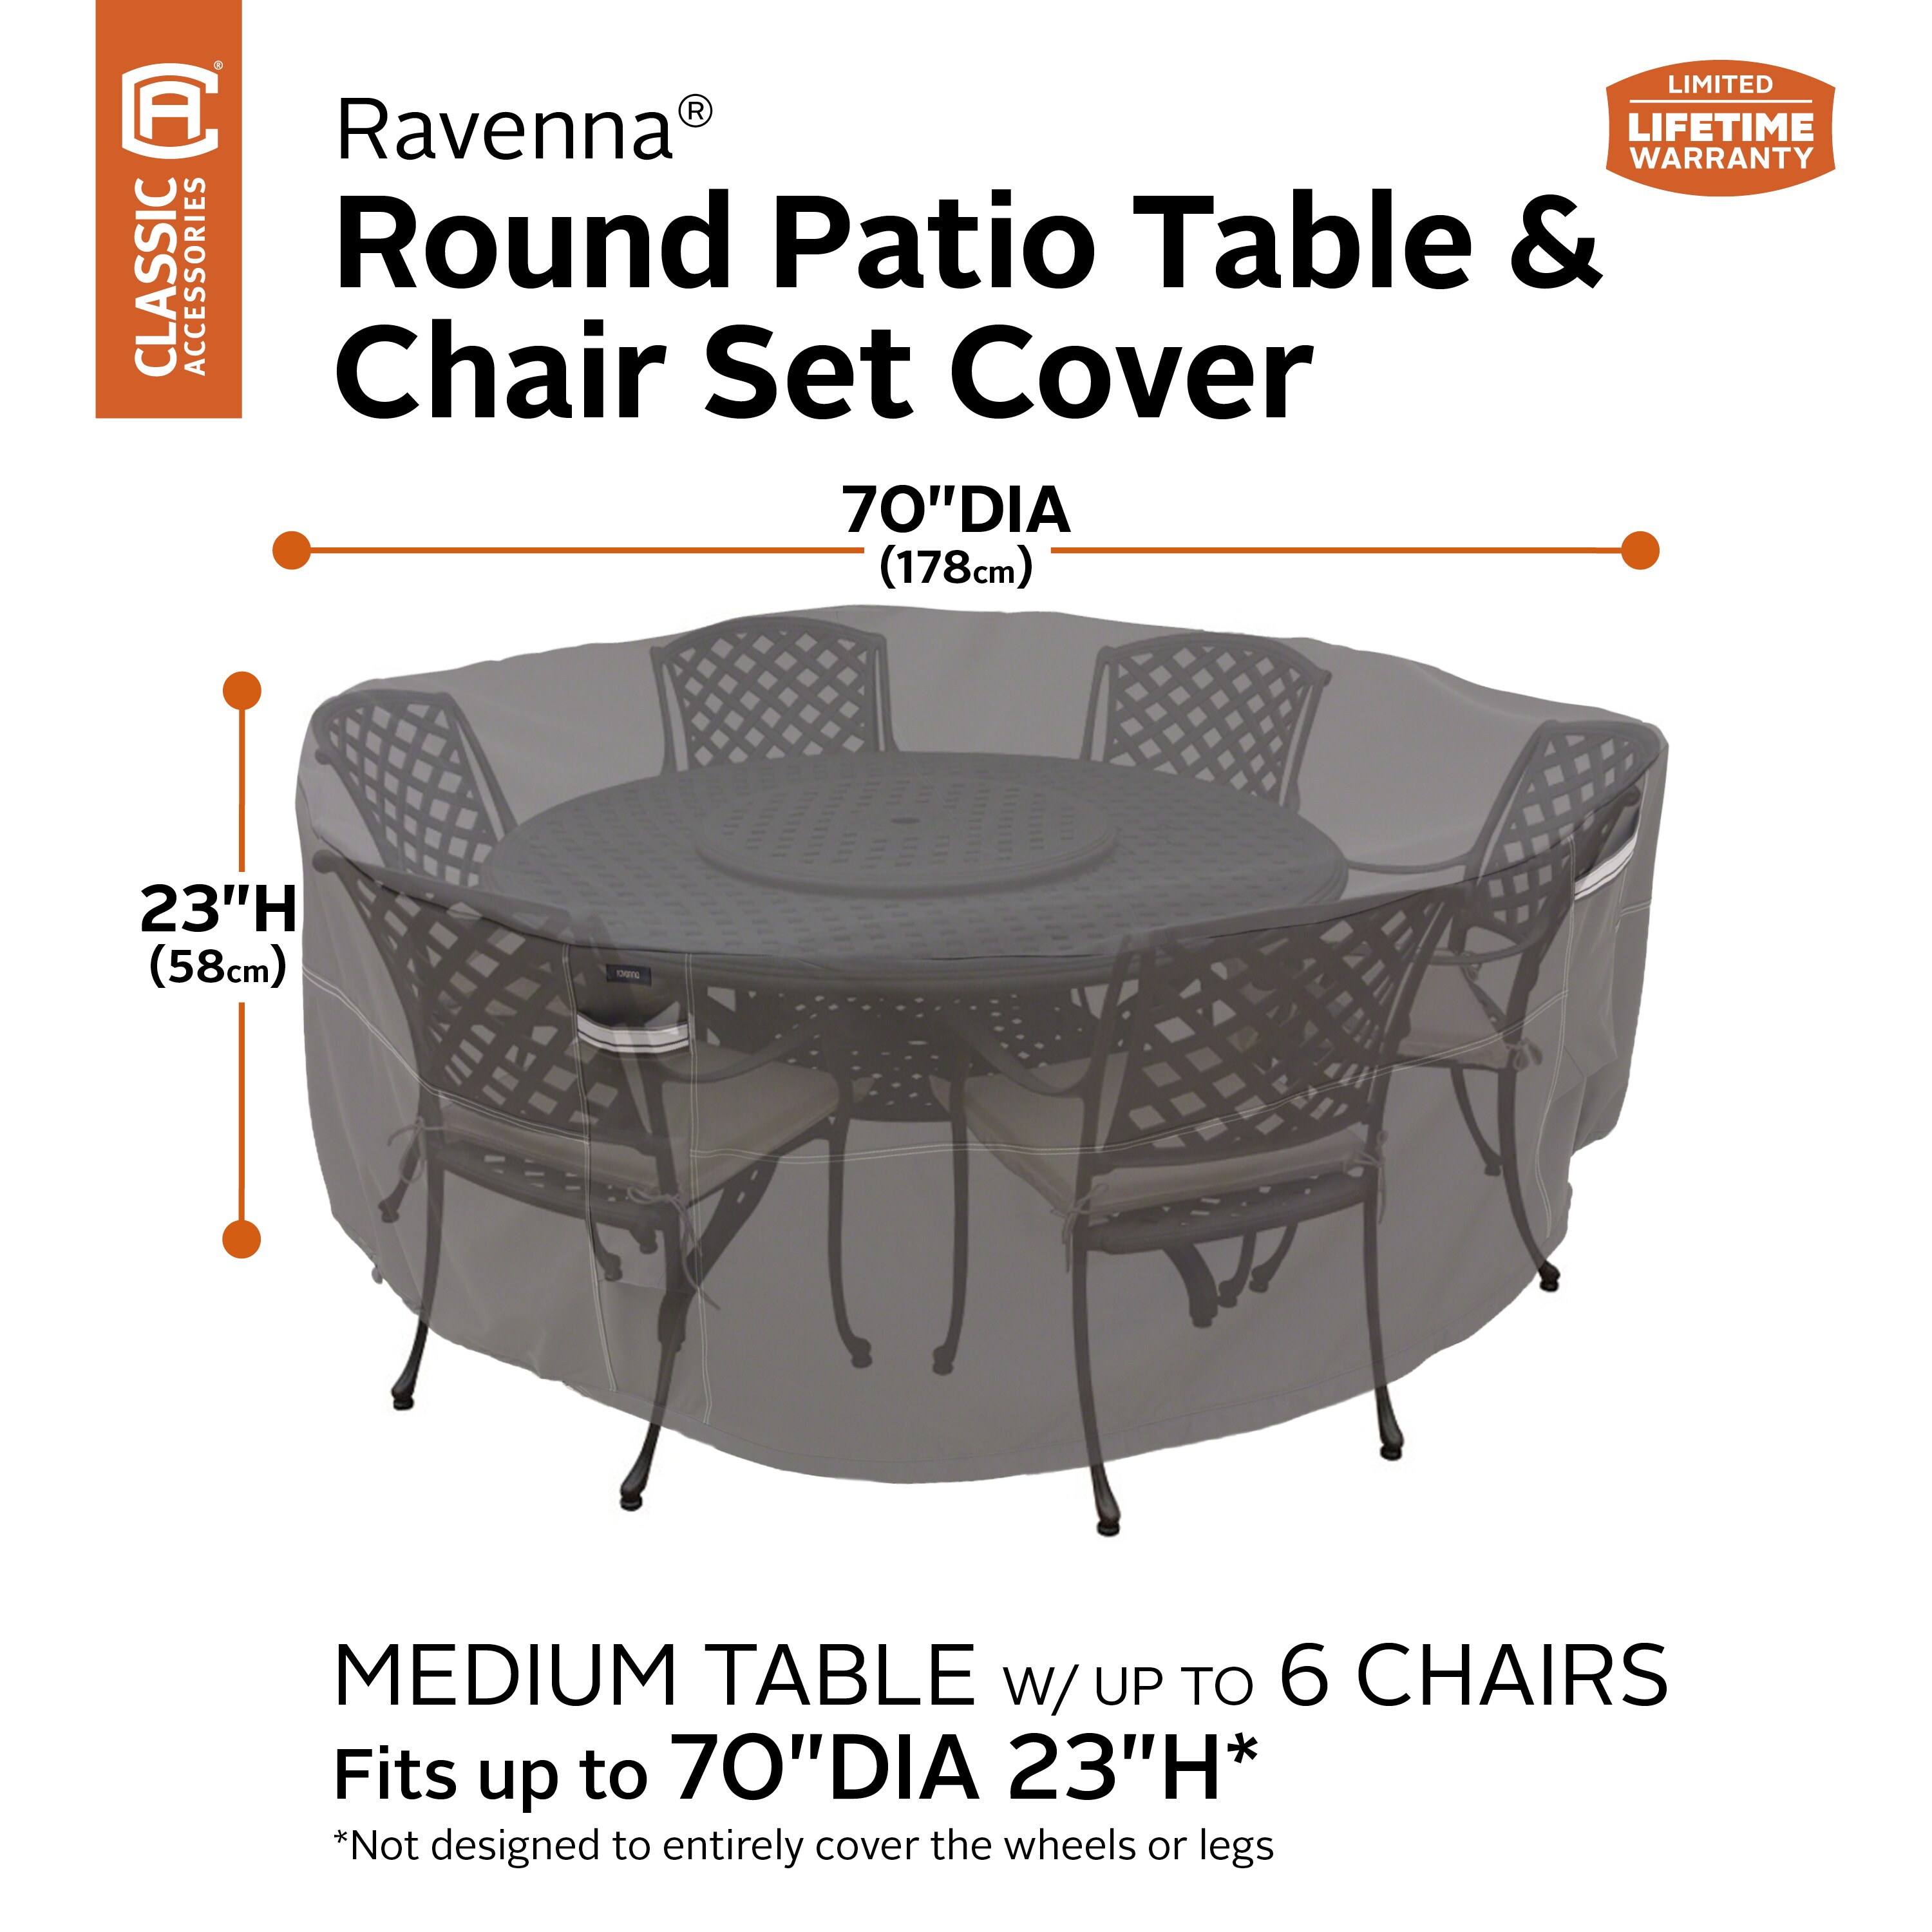 94" Veranda Patio Set Cover Table & Chair Outdoor Garden Furniture Round Large 